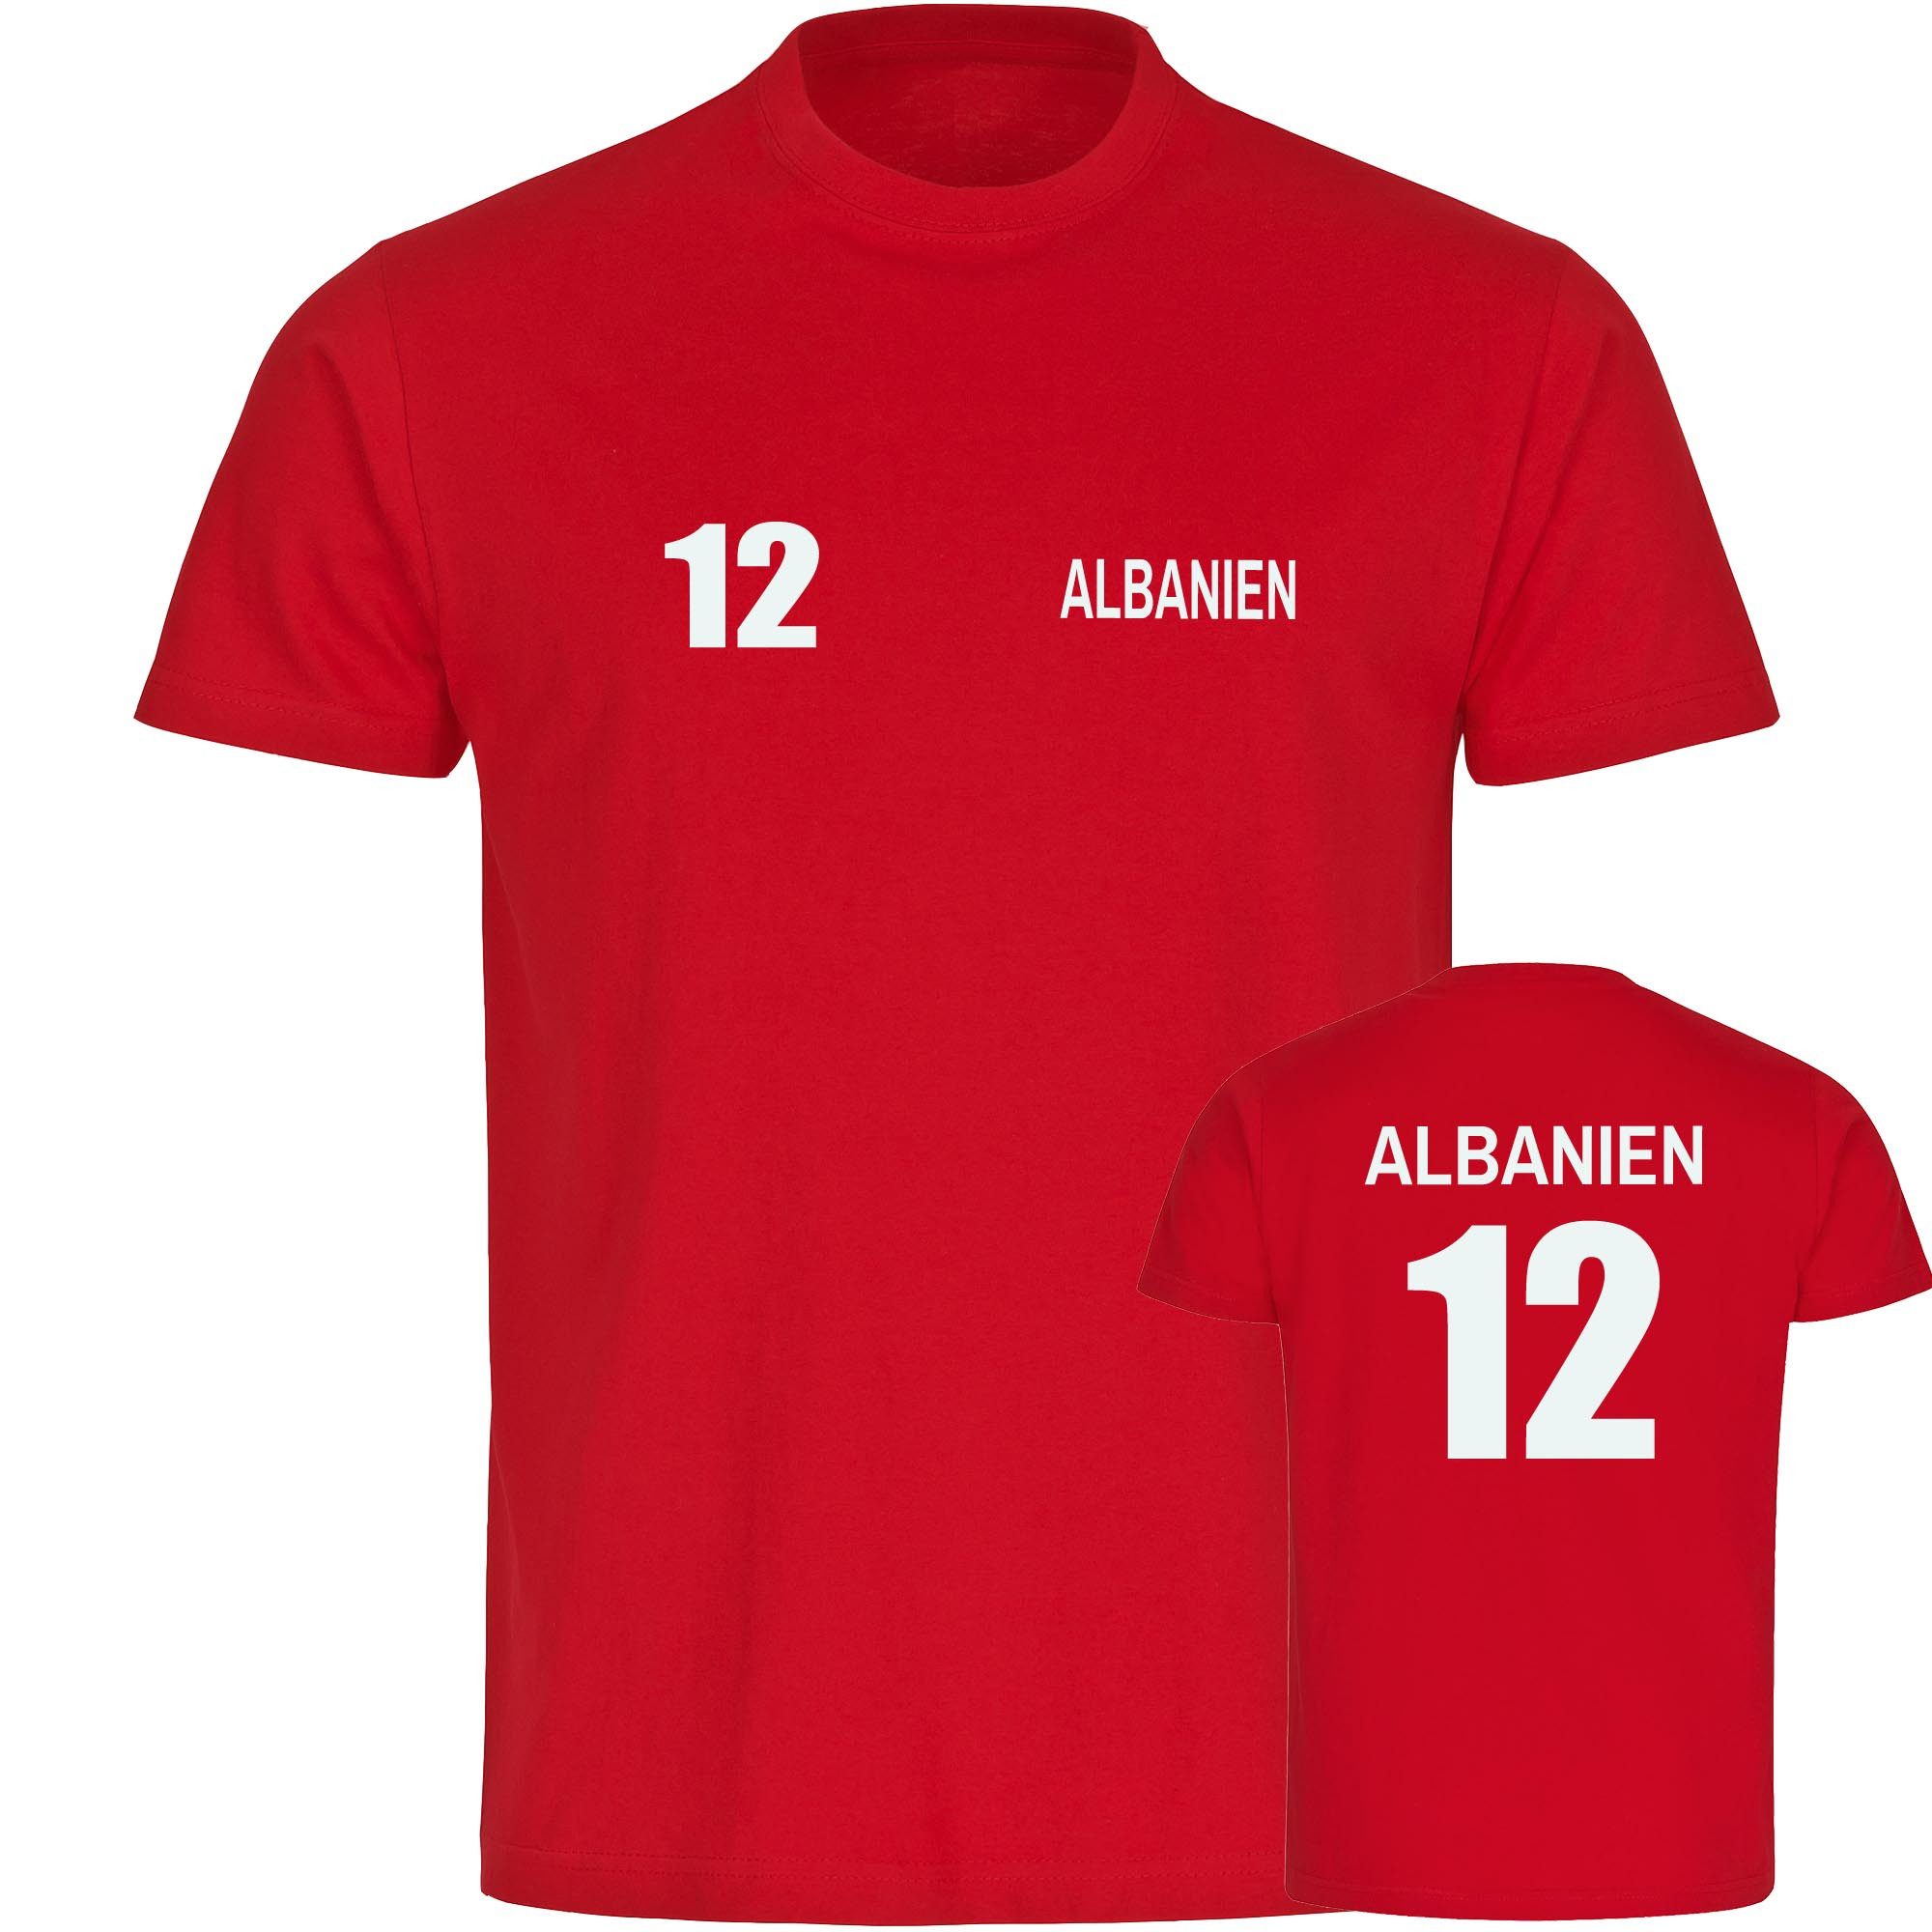 multifanshop T-Shirt Herren Albanien - Trikot 12 - Männer